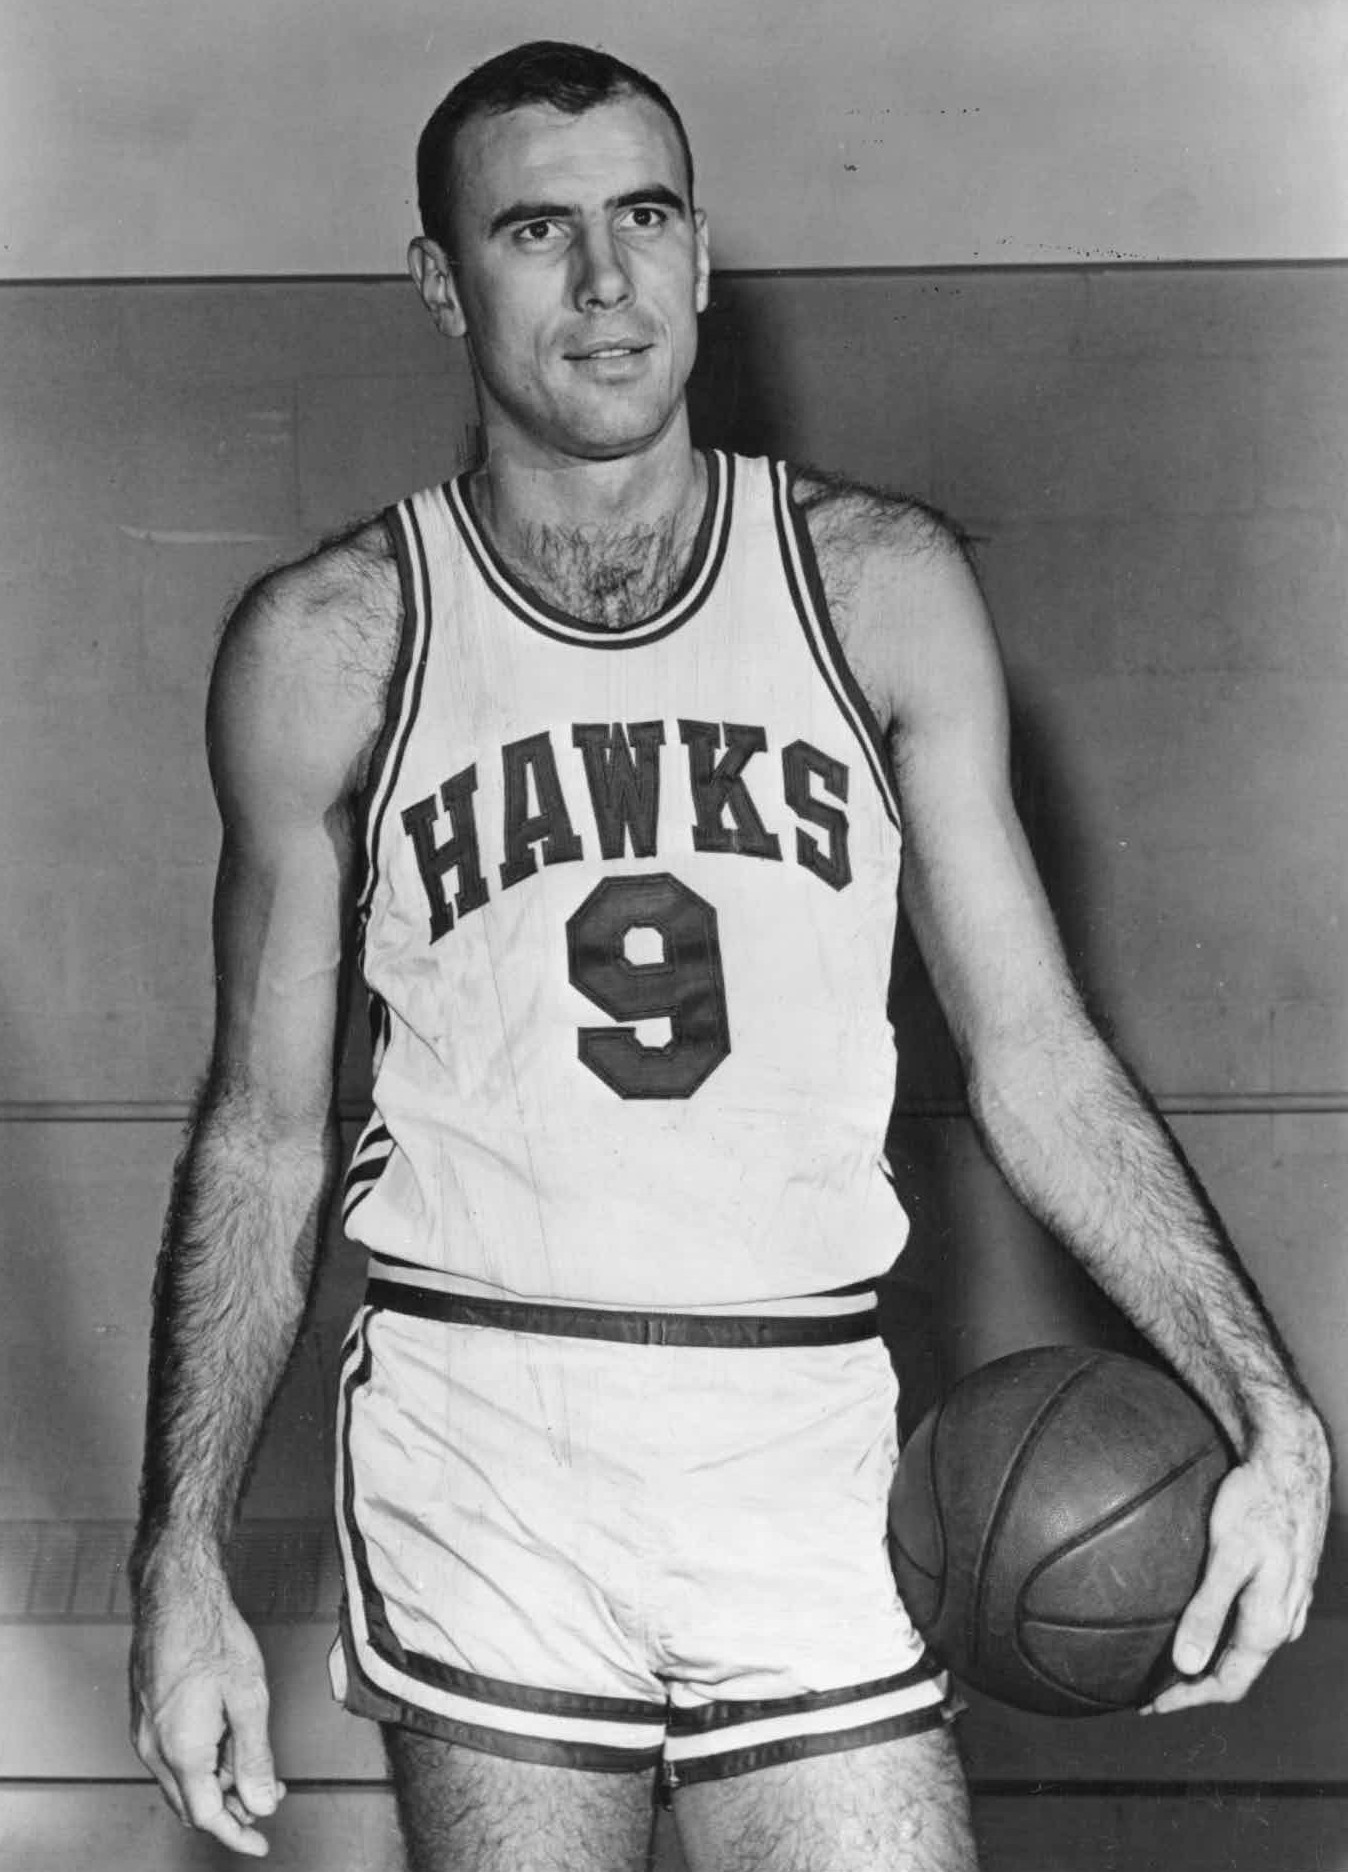 Bob Pettit.St. Louis Hawks Basketball